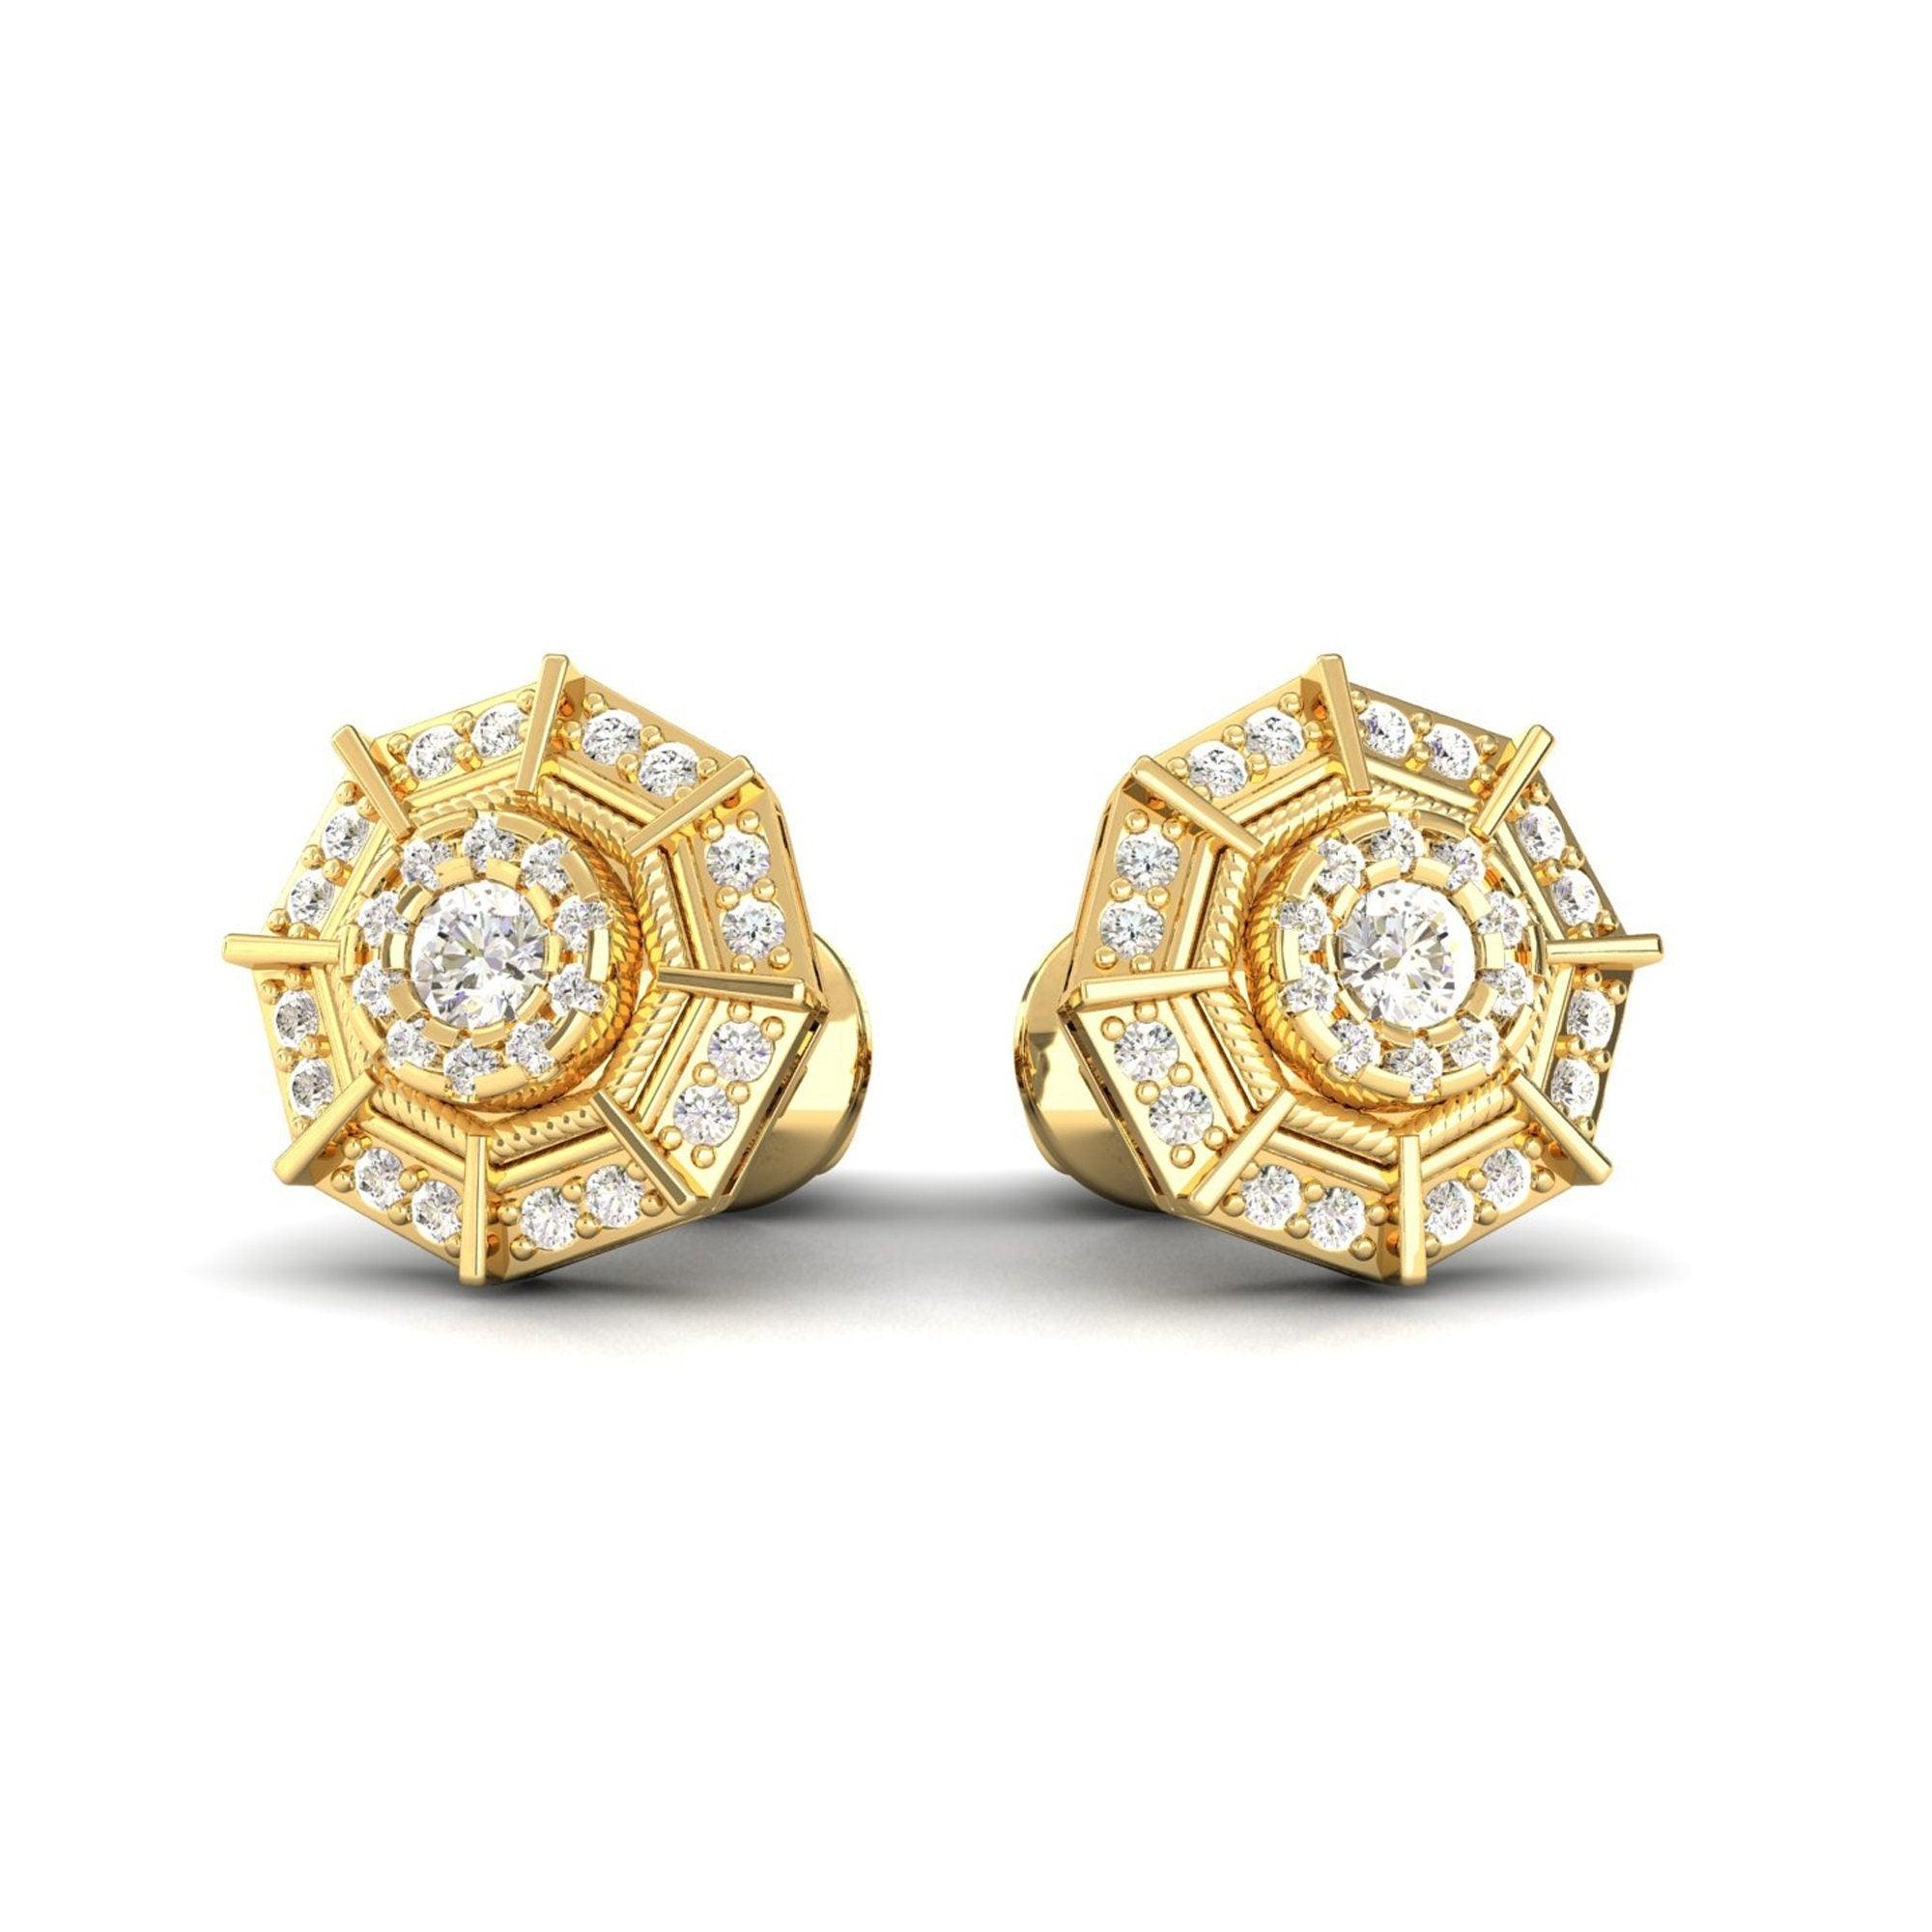 Real Diamond Stud Earring, Delicate White/Yellow Gold Earrings, Rose Gold Designer Earrings - GeumJewels